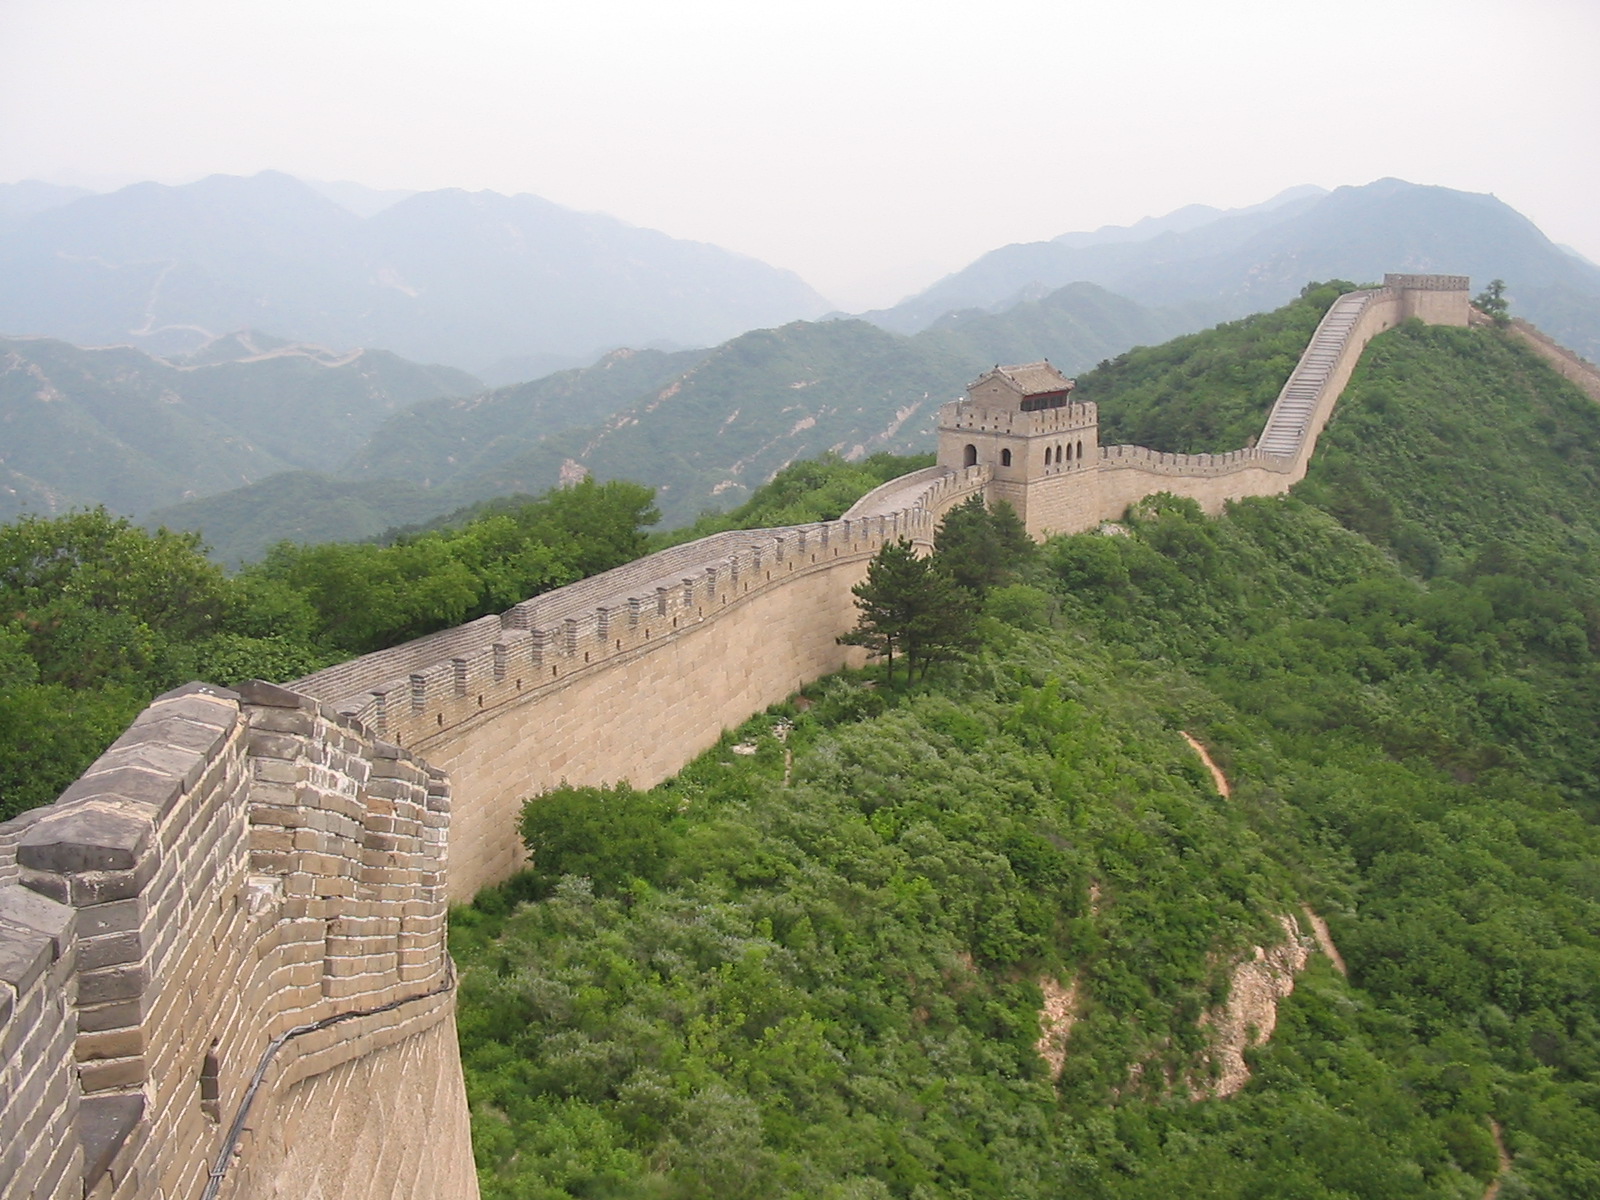 Deweys China Trip Photos Beijing Great Wall Of China